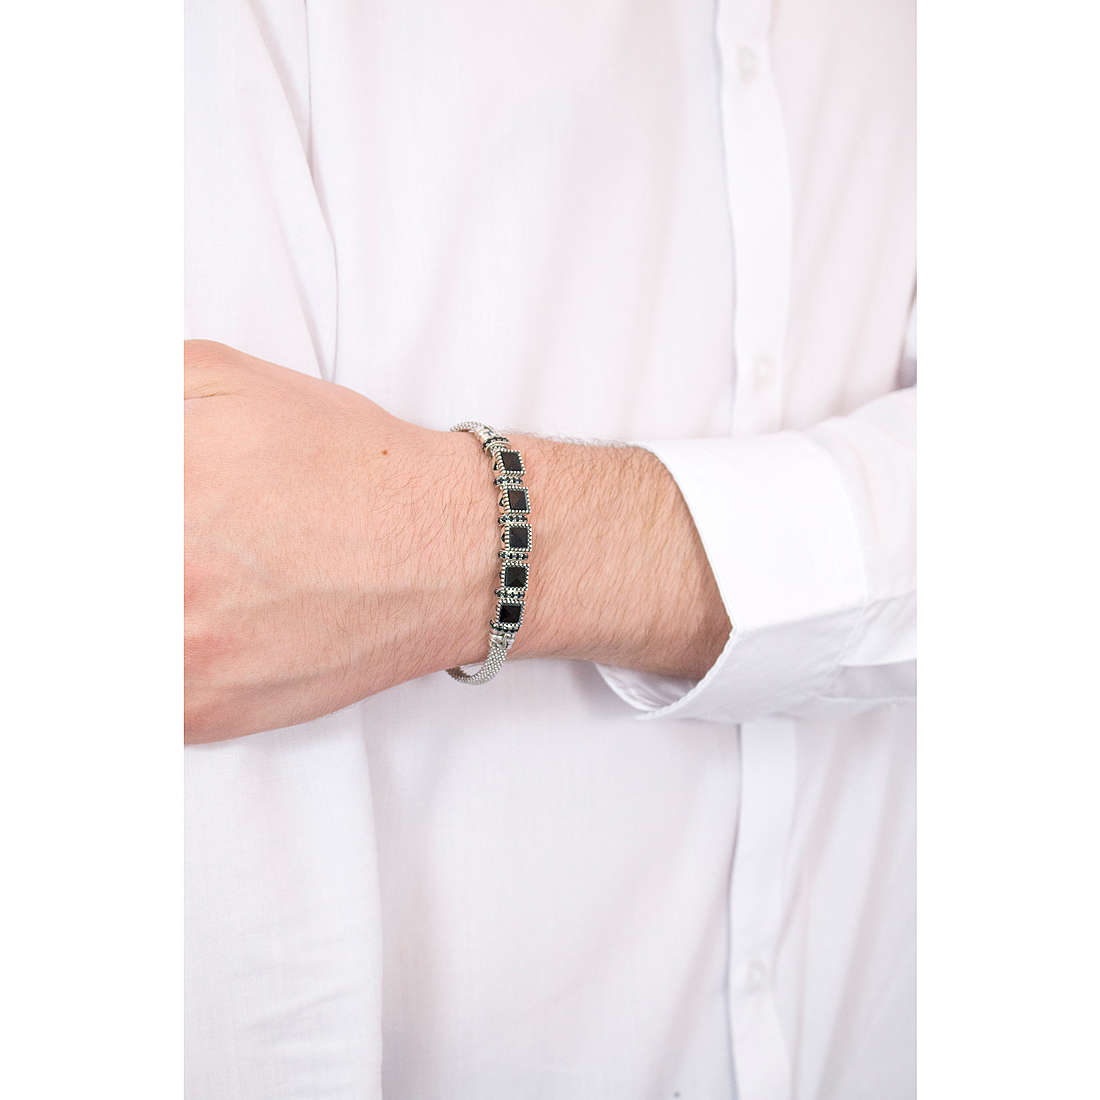 Cesare Paciotti bracelets Black Bezel man JPBR1453V wearing